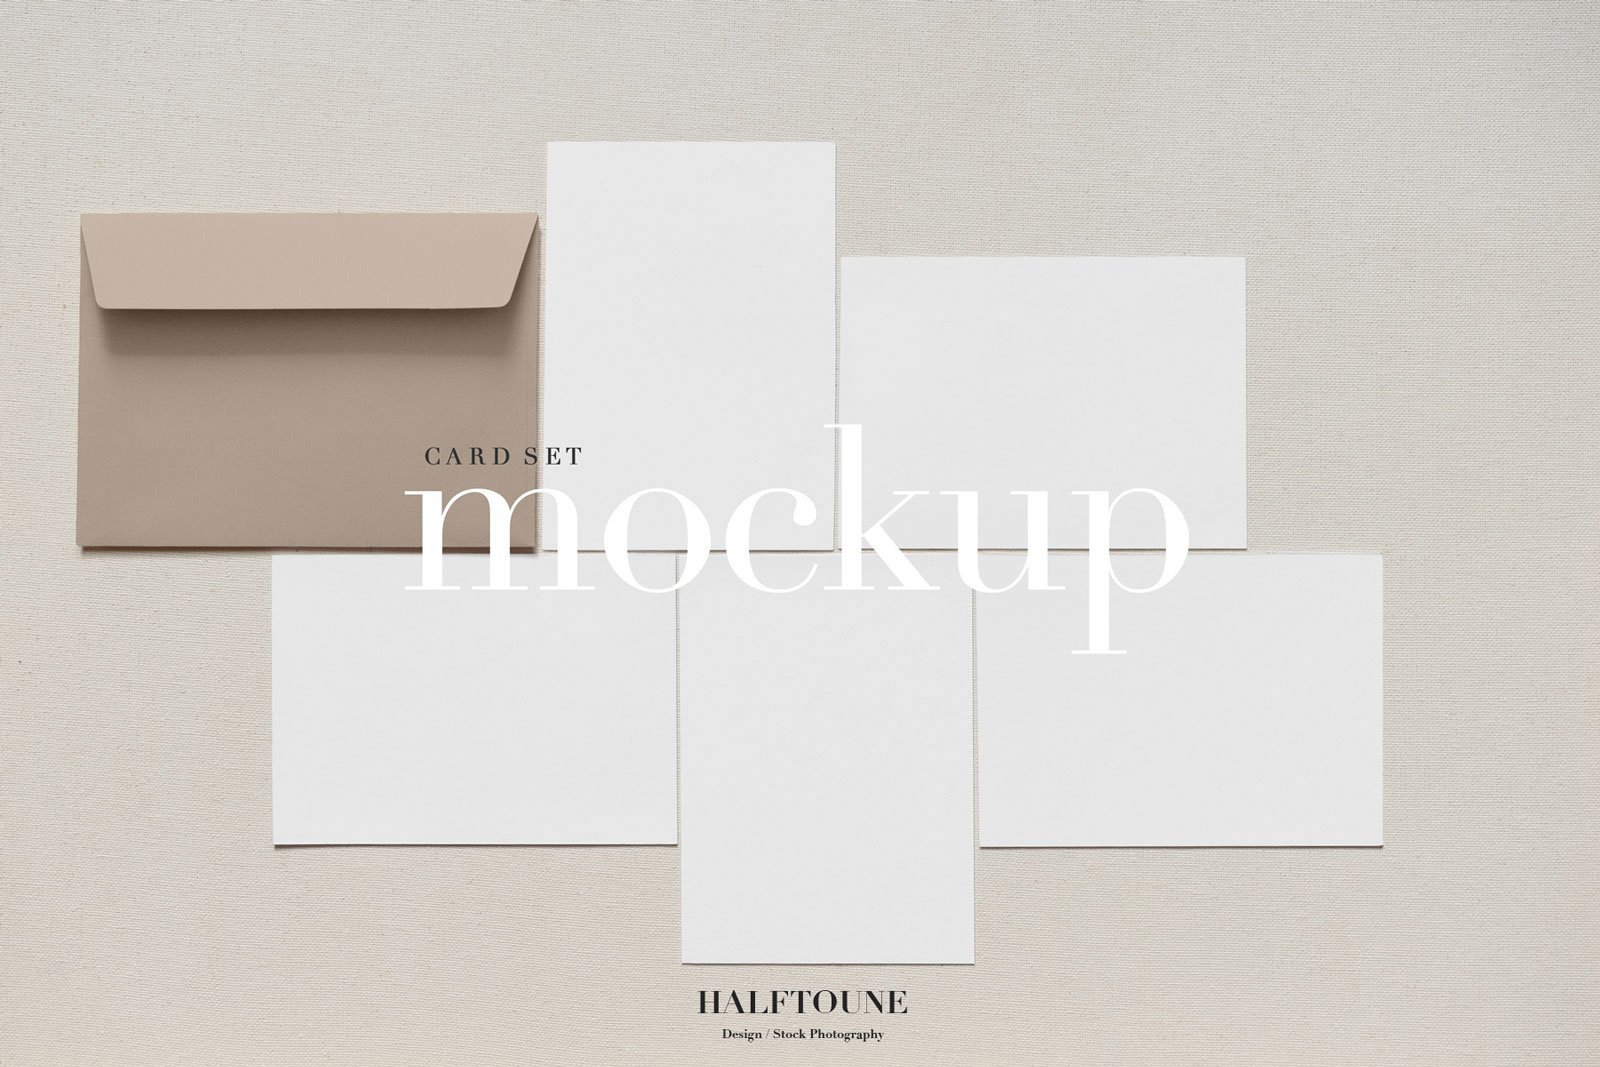 Stationery Mockup | Card Set Mockup cover image.